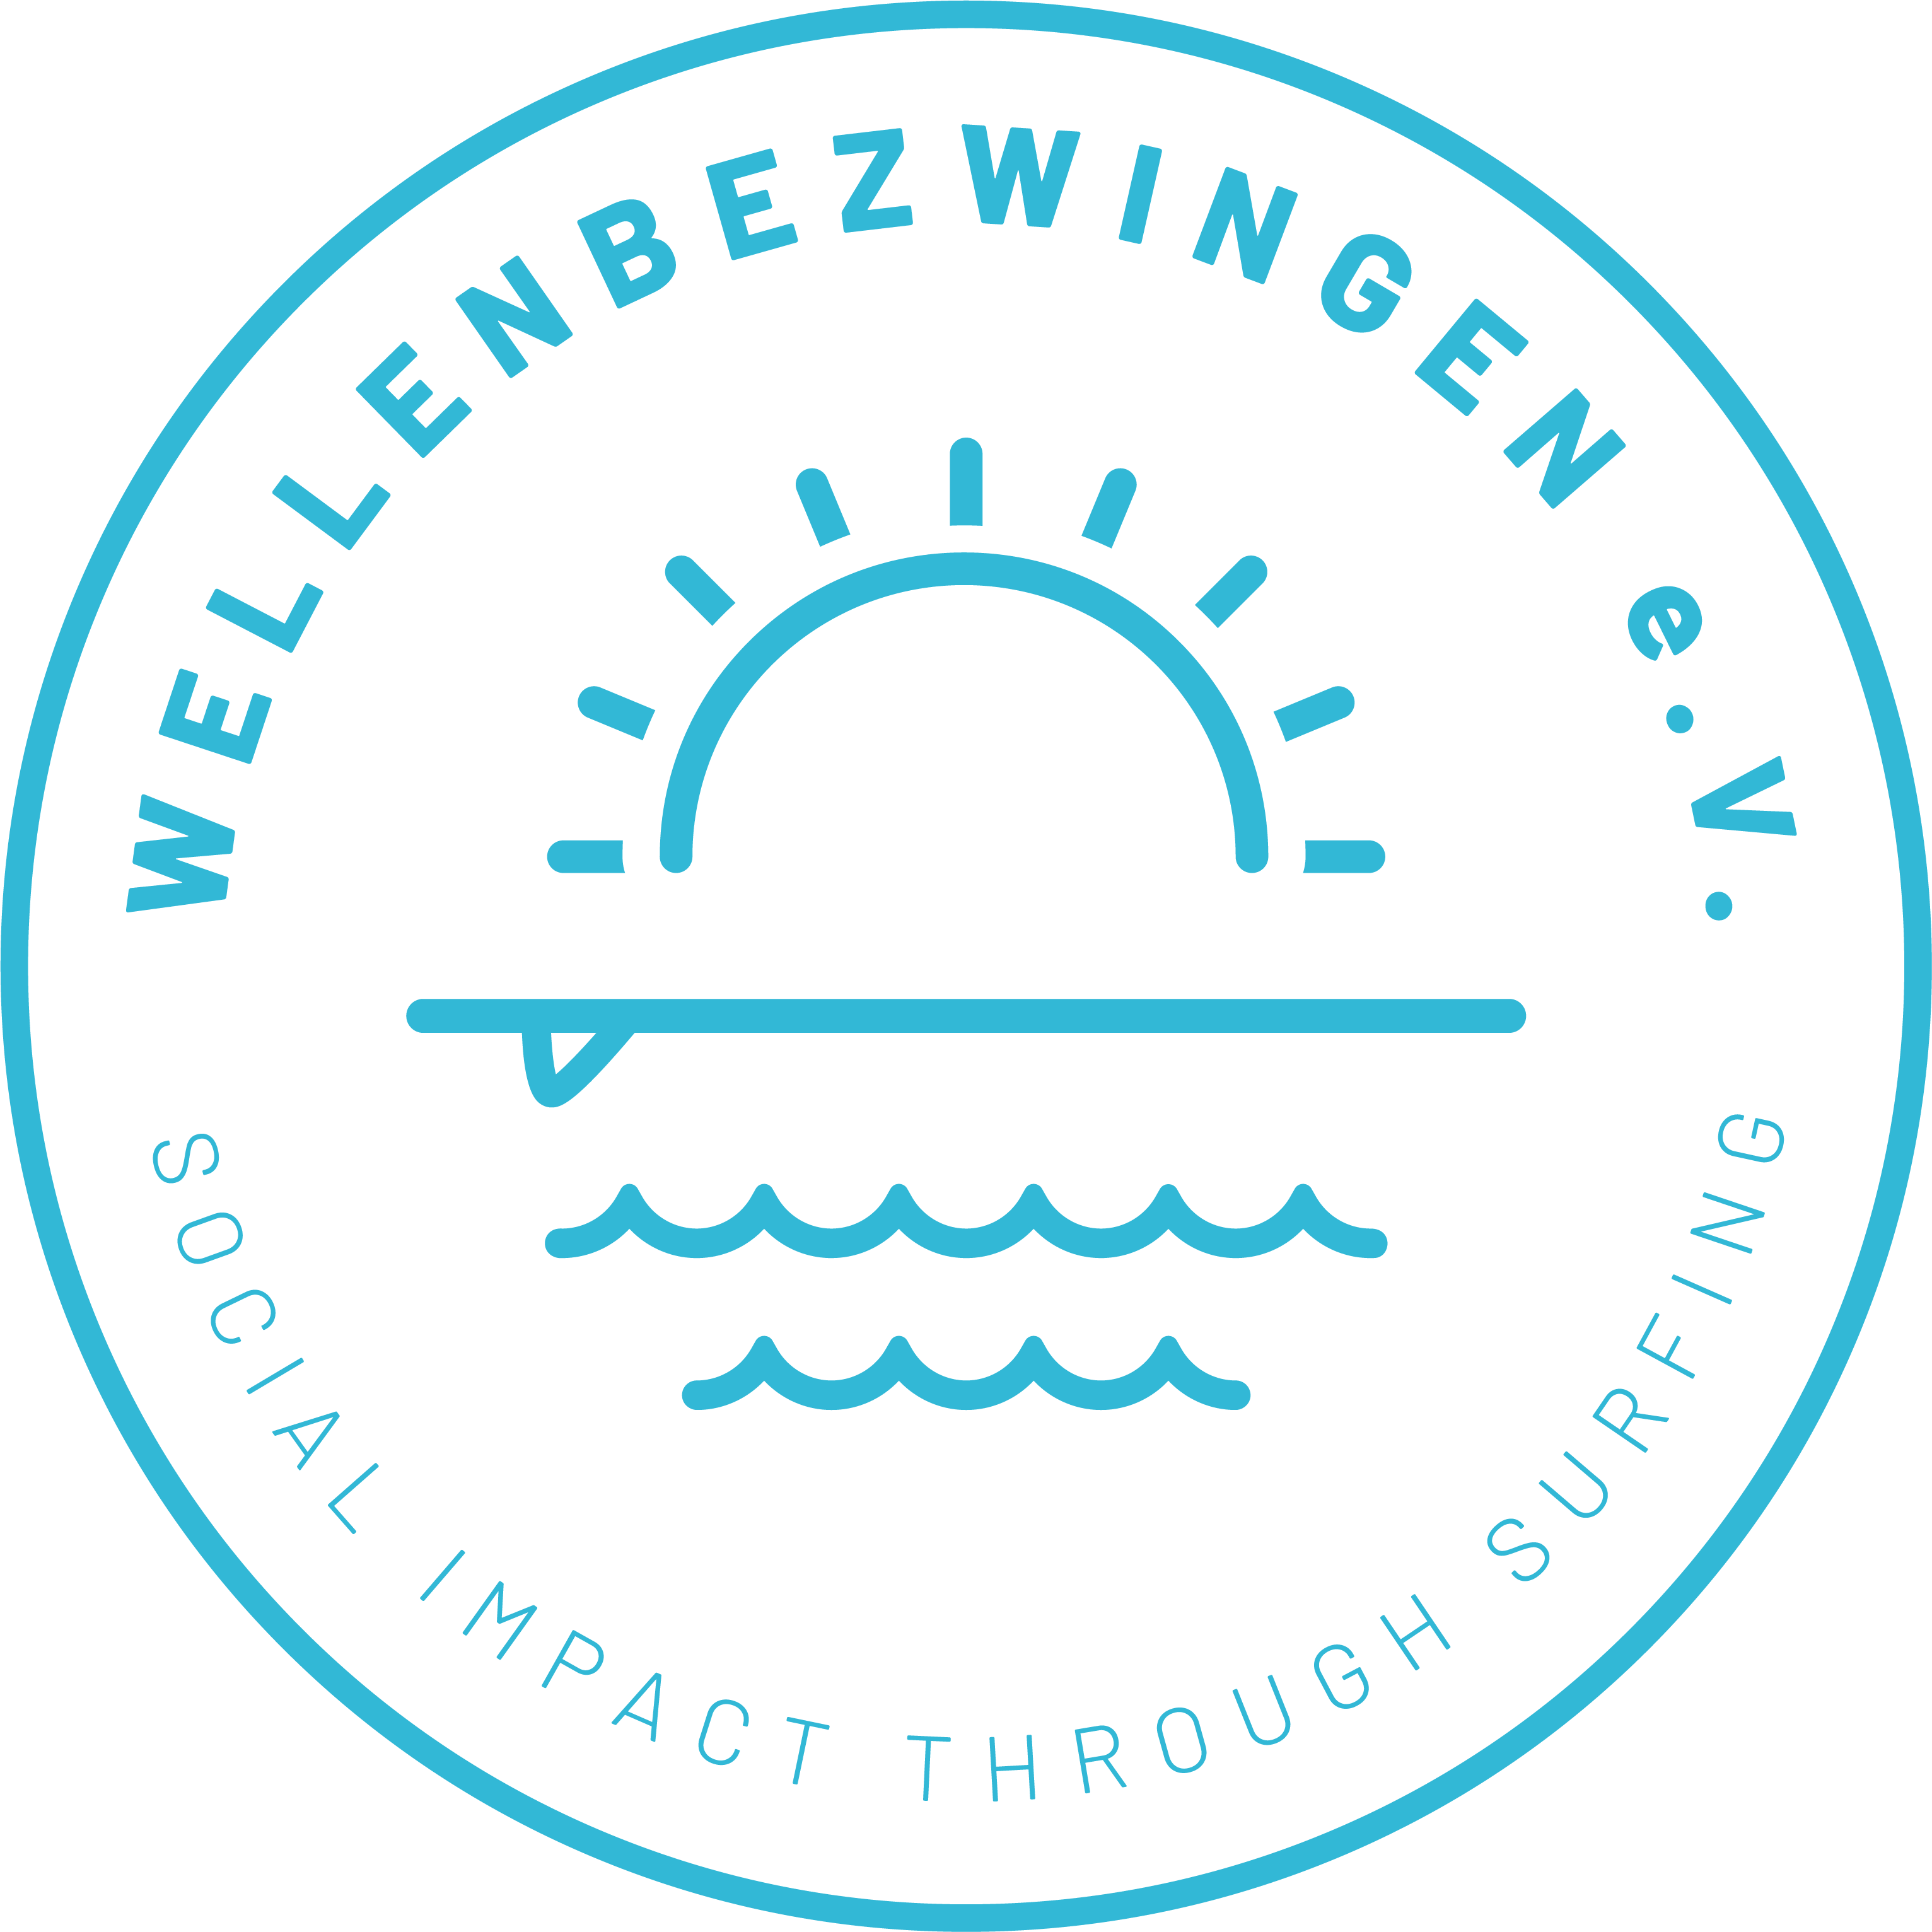 Verein Wellenbewingen - Social Impact through Surfing